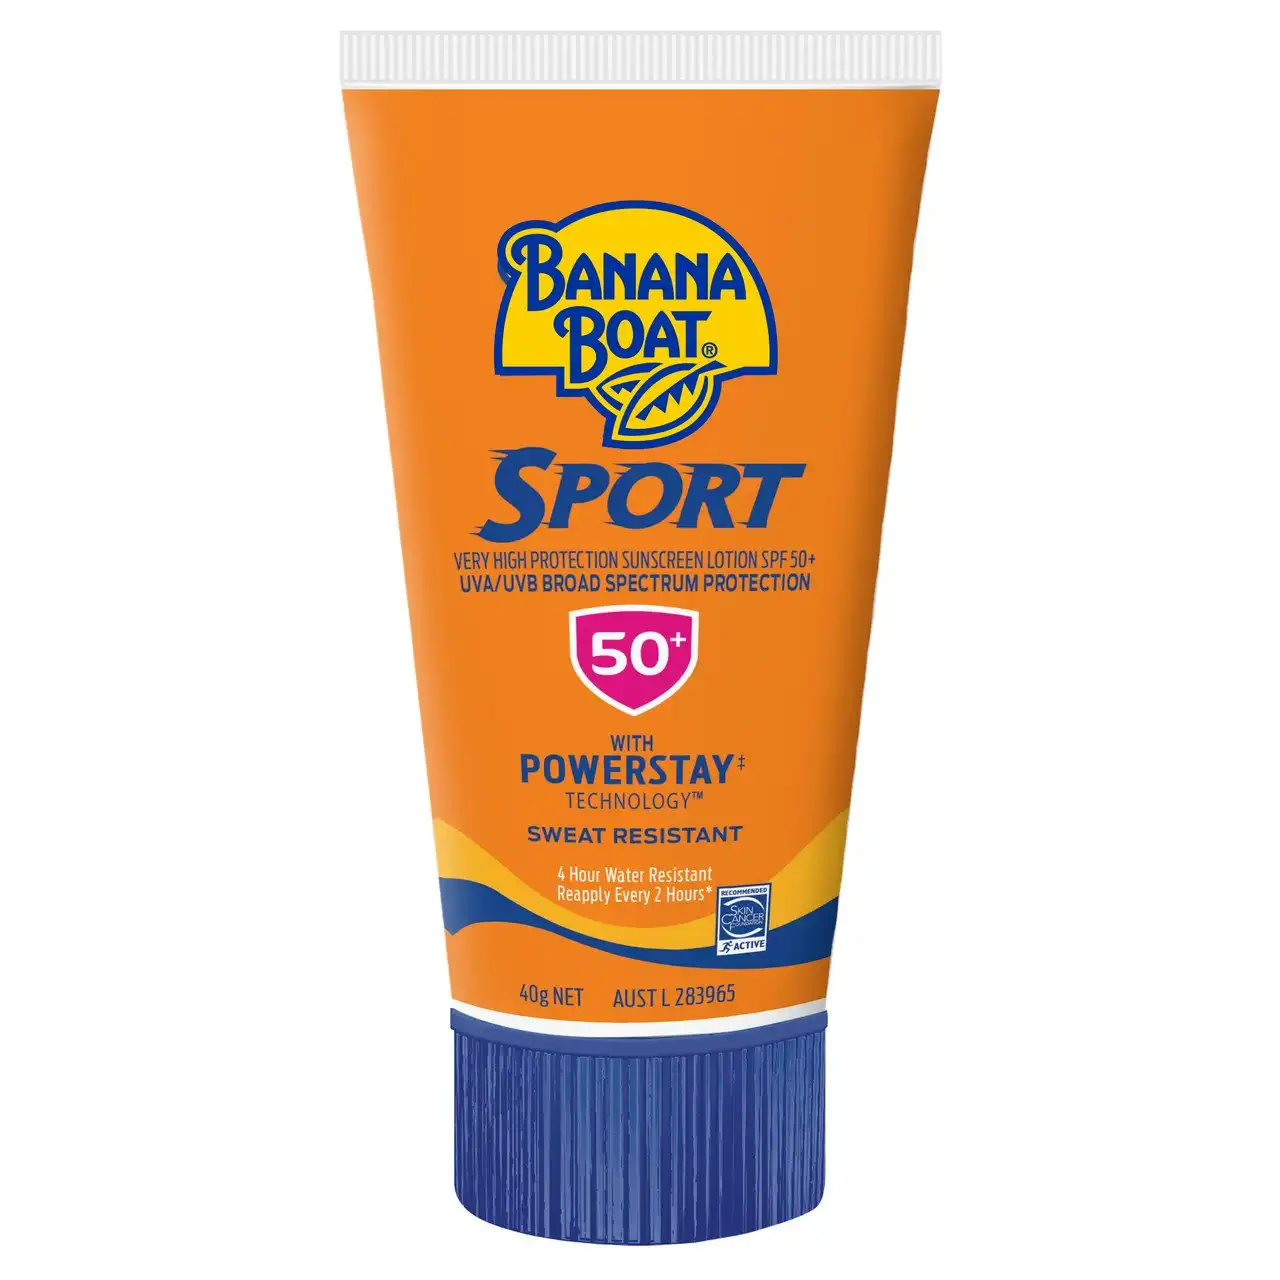 Banana Boat Sport Sunscreen Lotion SPF 50+ 40g